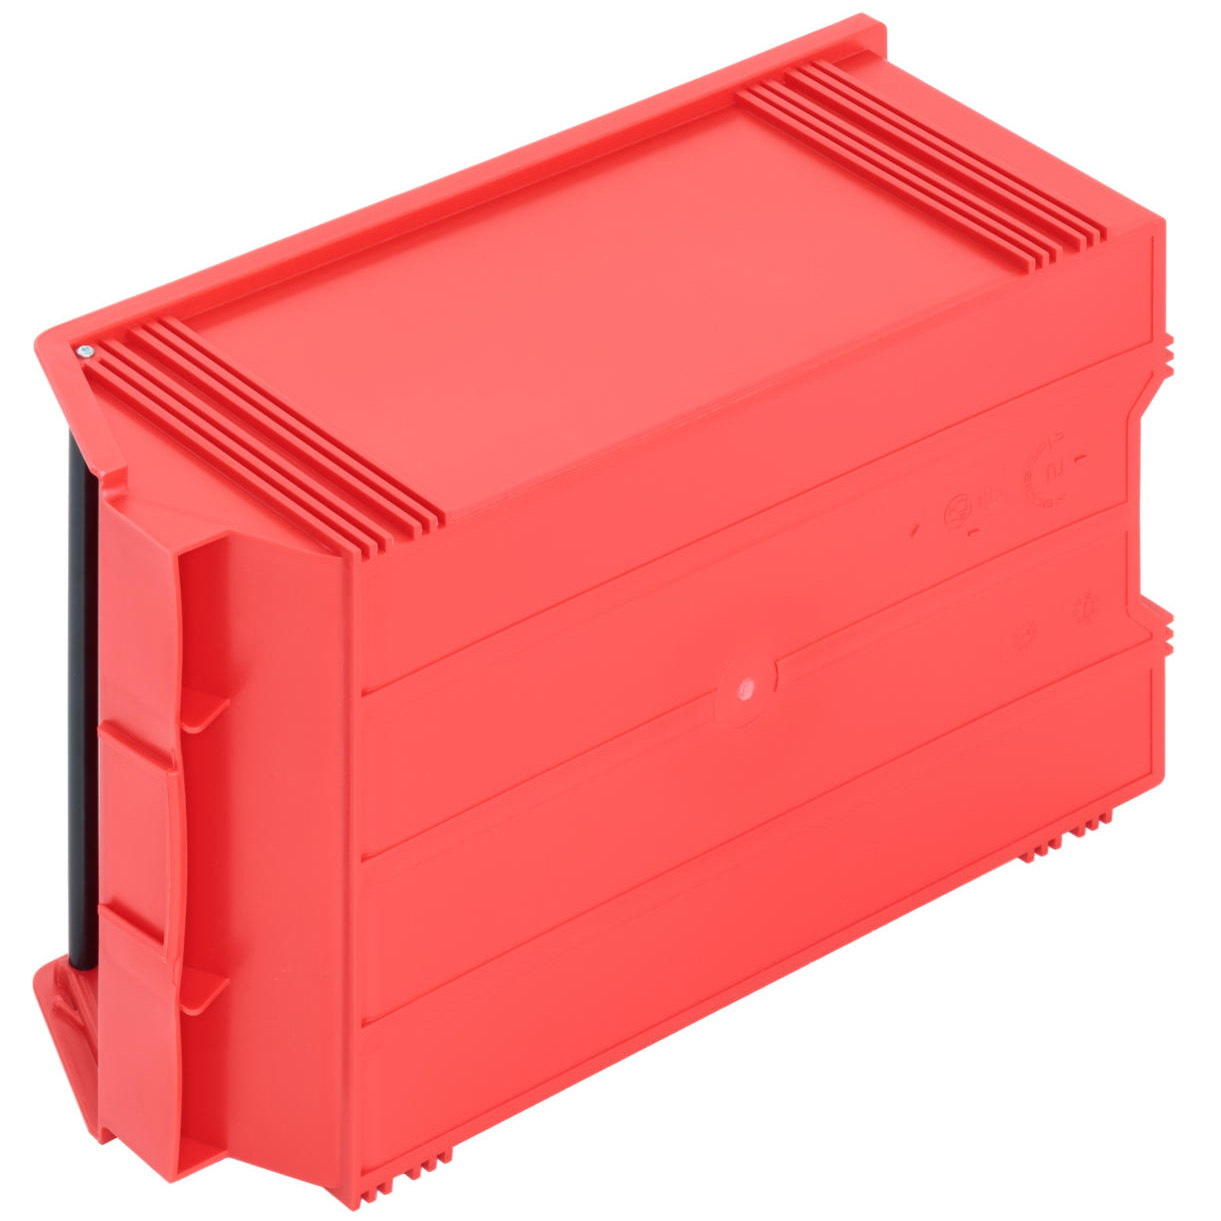 Sichtbox CLASSIC FB 2, LxBxH 510/450x300x200 mm, Gewicht 1400 g, 27 Liter, rot